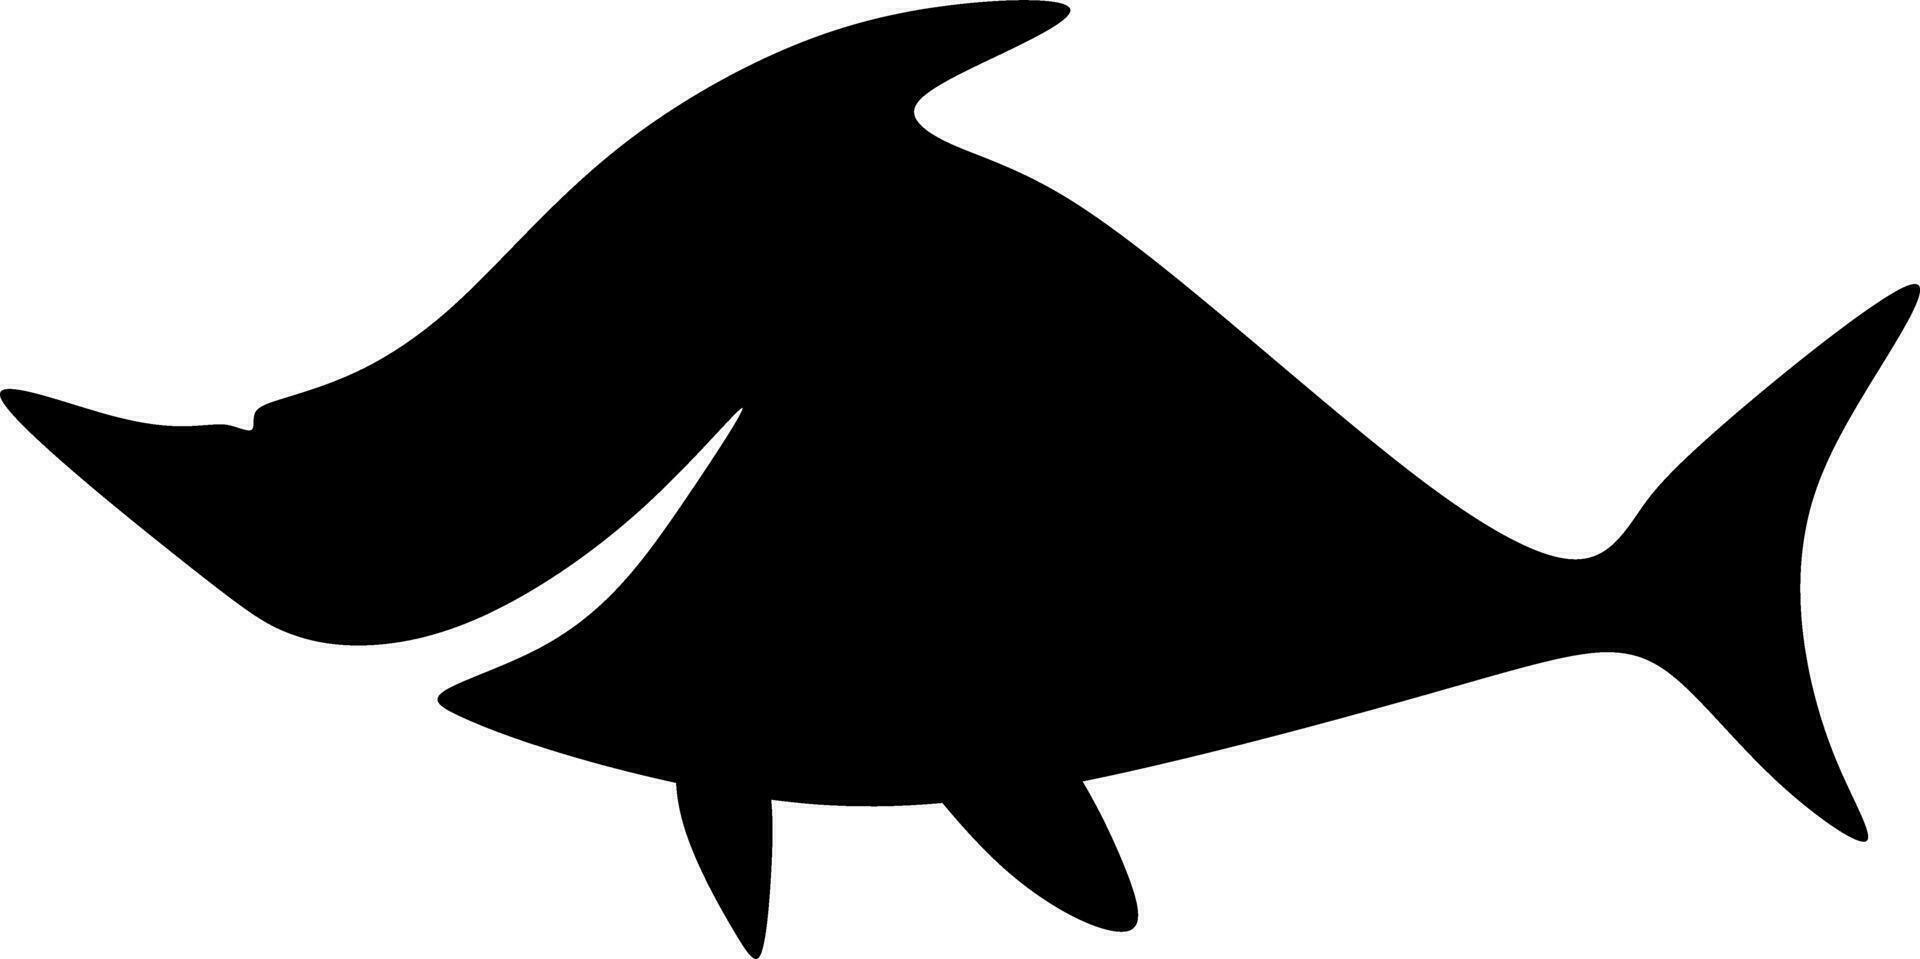 a silhouette of a shark vector